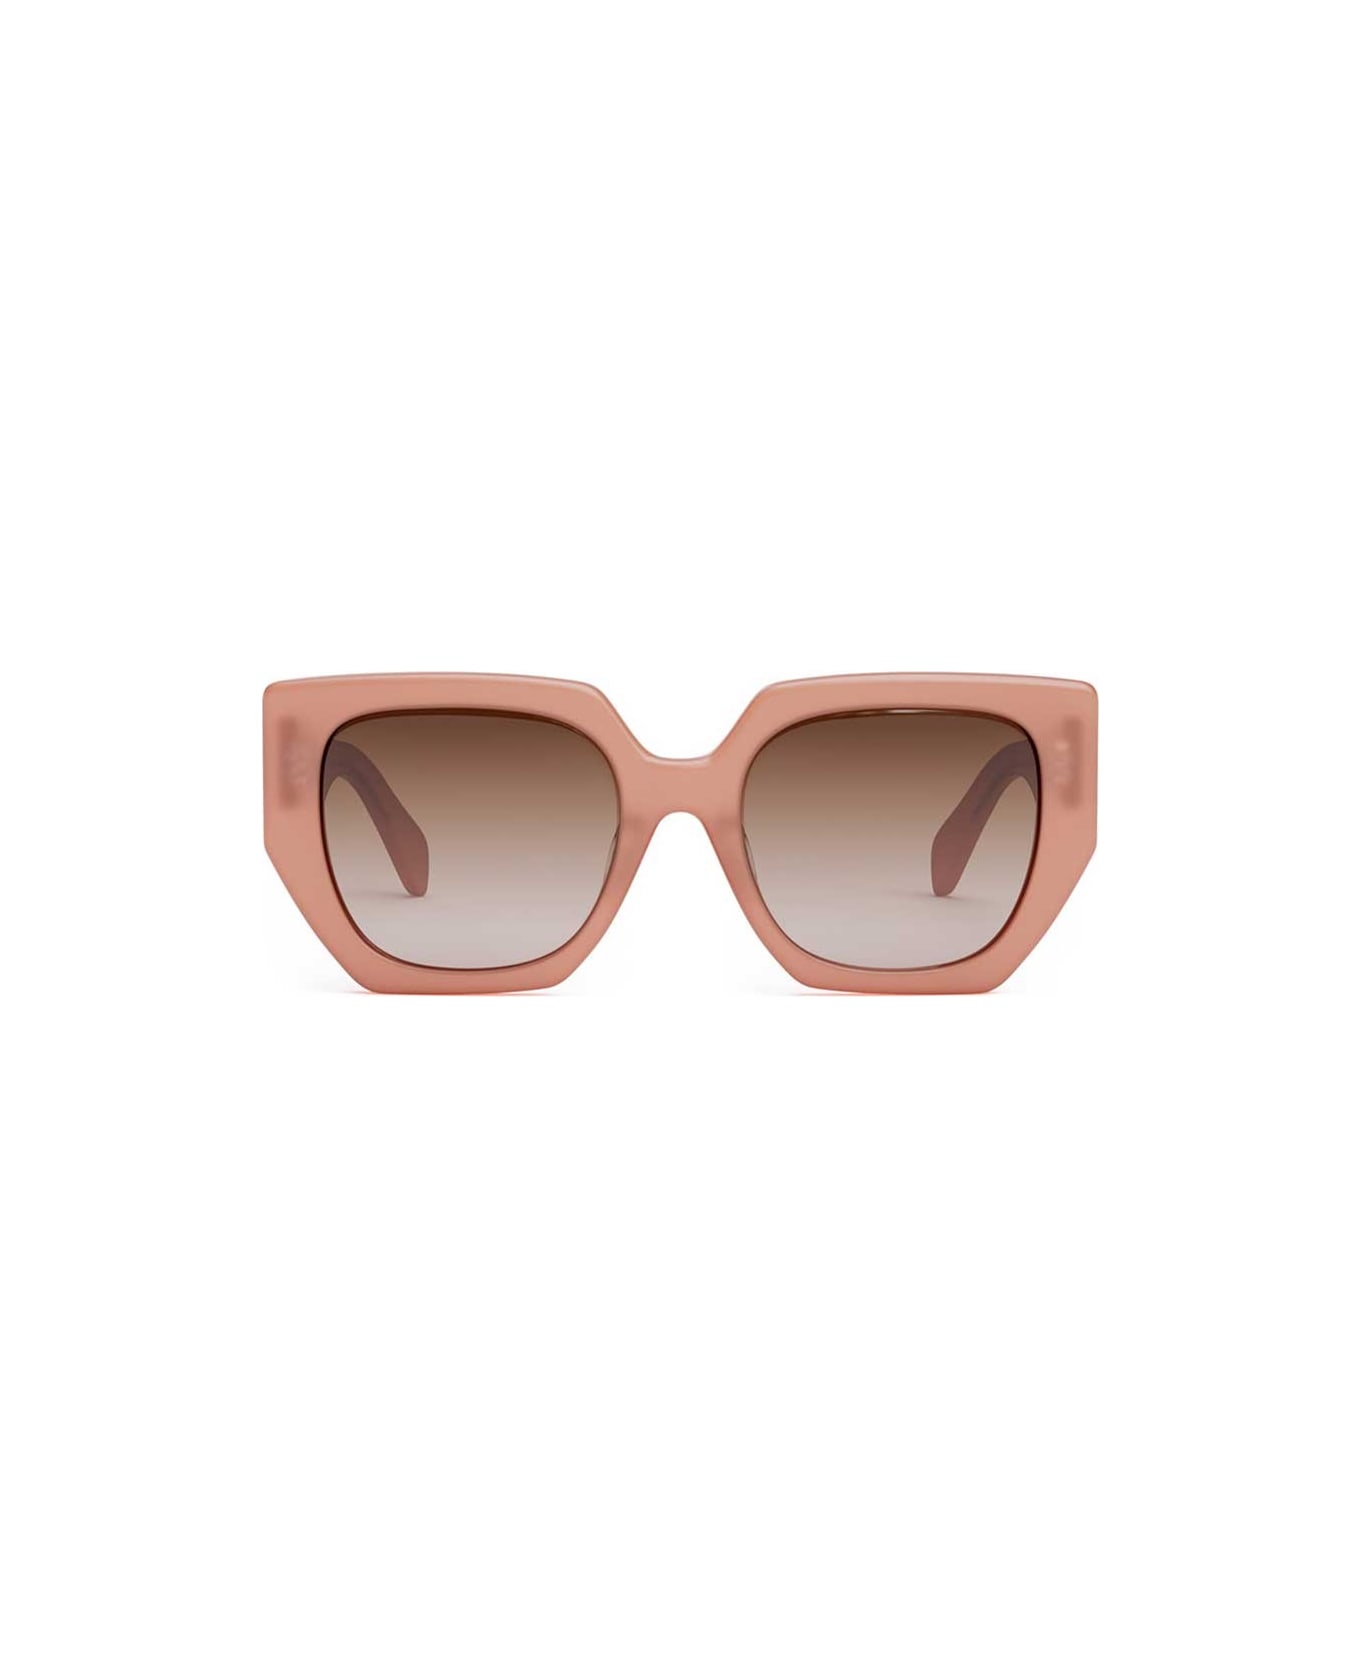 Celine Sunglasses - Rosa/Marrone